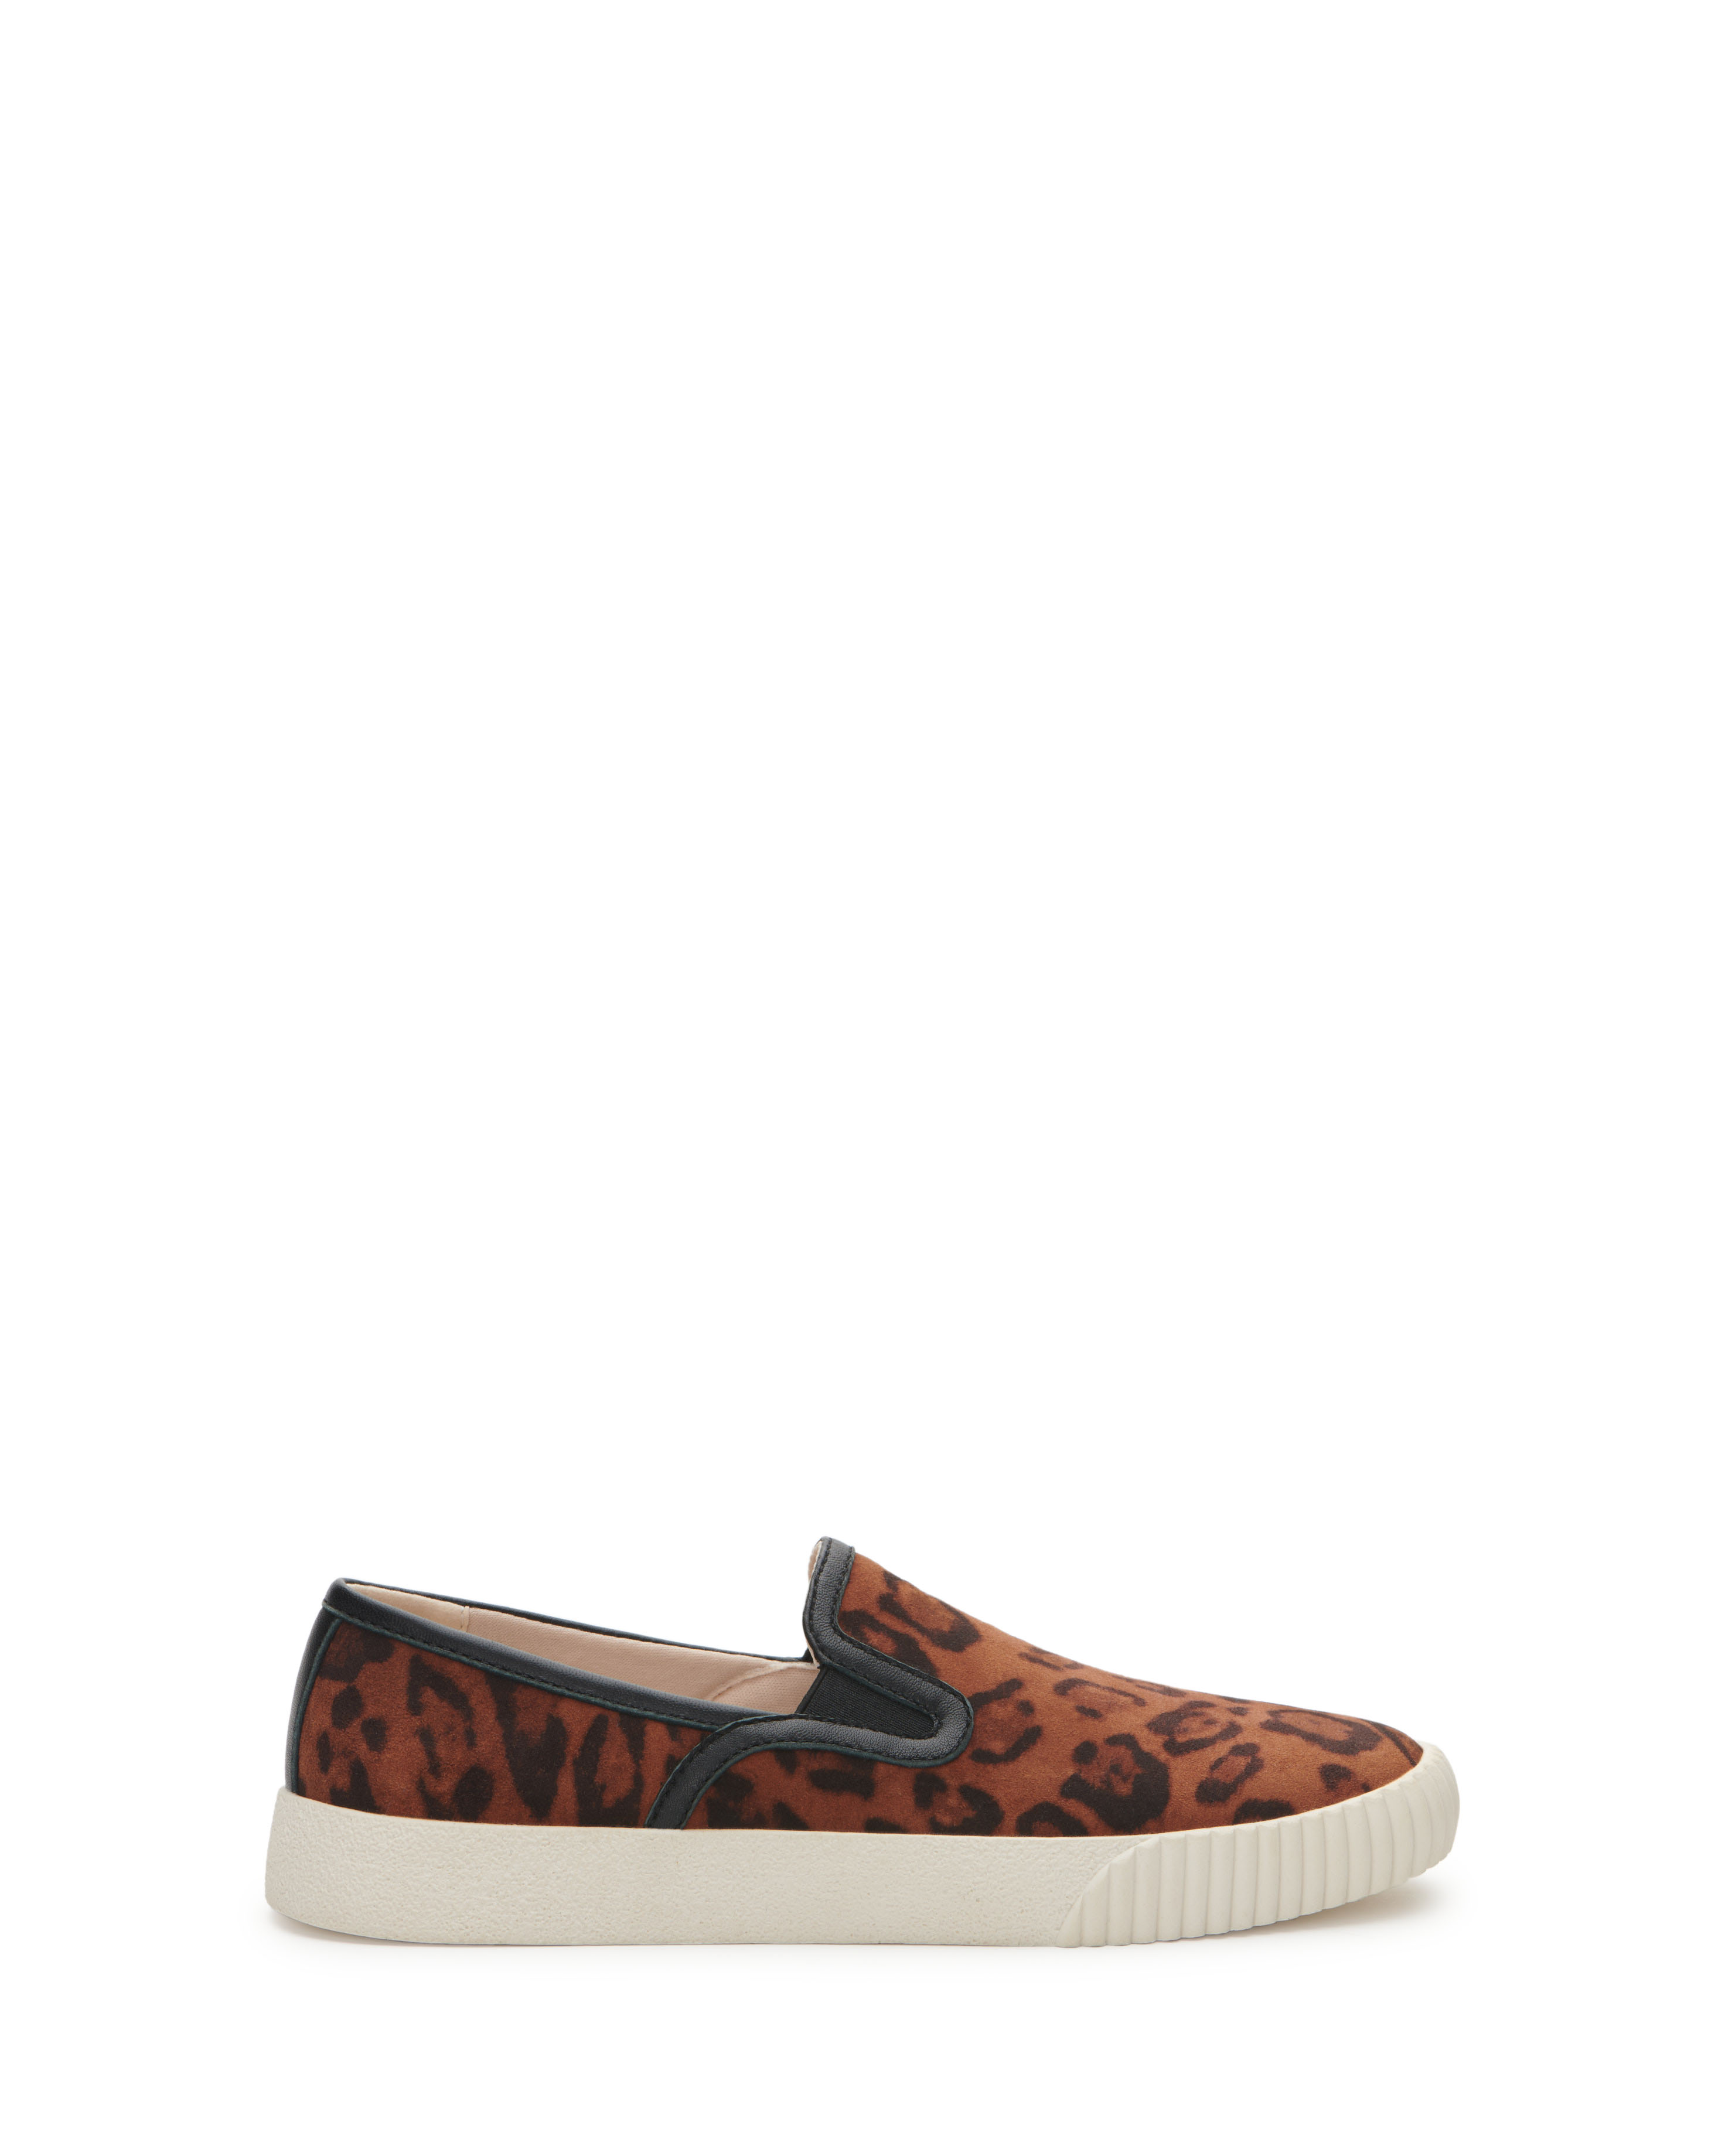 Women's Vince Camuto Aljetti Slip On Sneakers Shoes Size 11 Warm Caramel Leopard Print